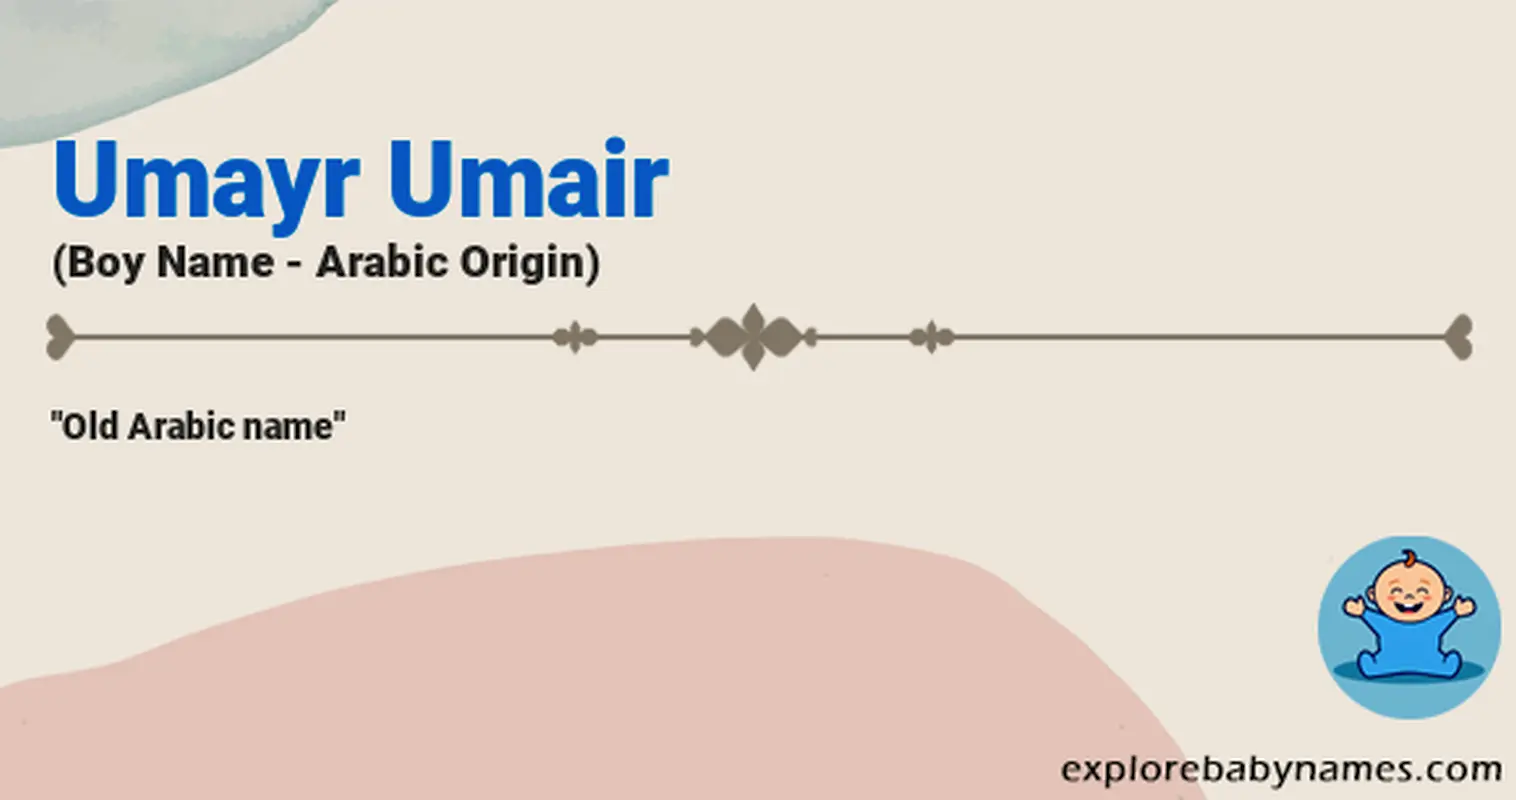 Meaning of Umayr Umair